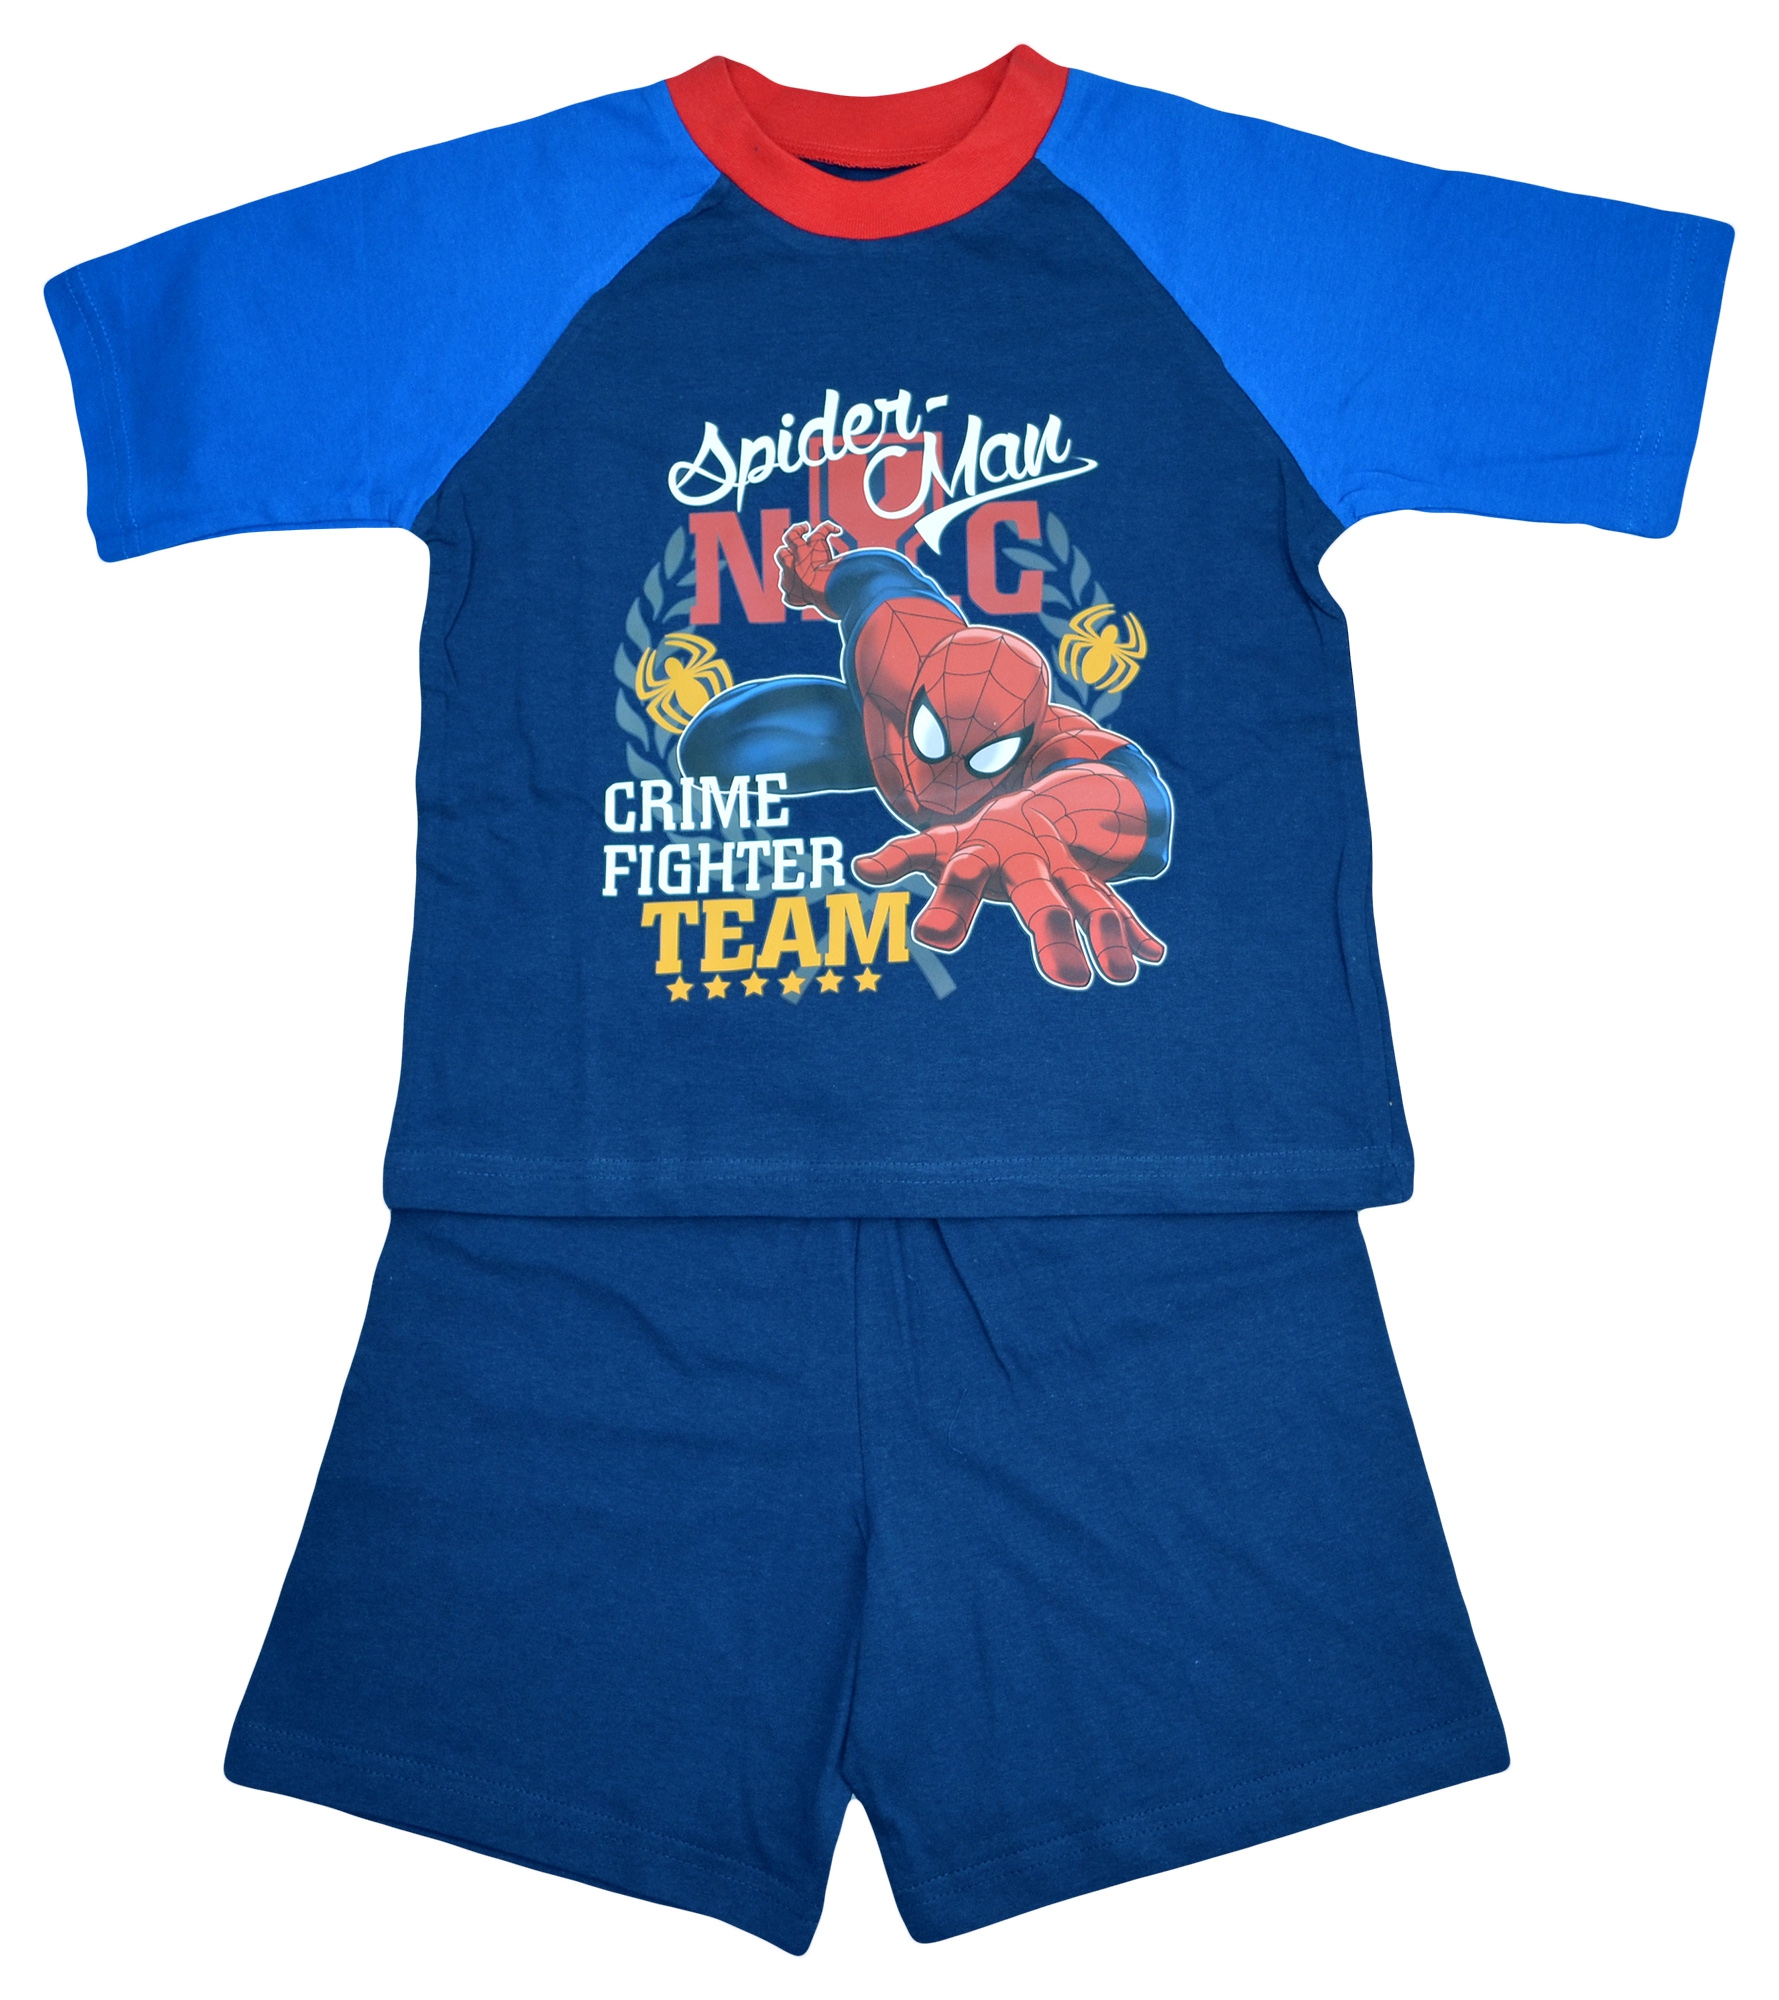 Spiderman 'Crime Fighter' Boys Short Pyjama Set 4-5 Years